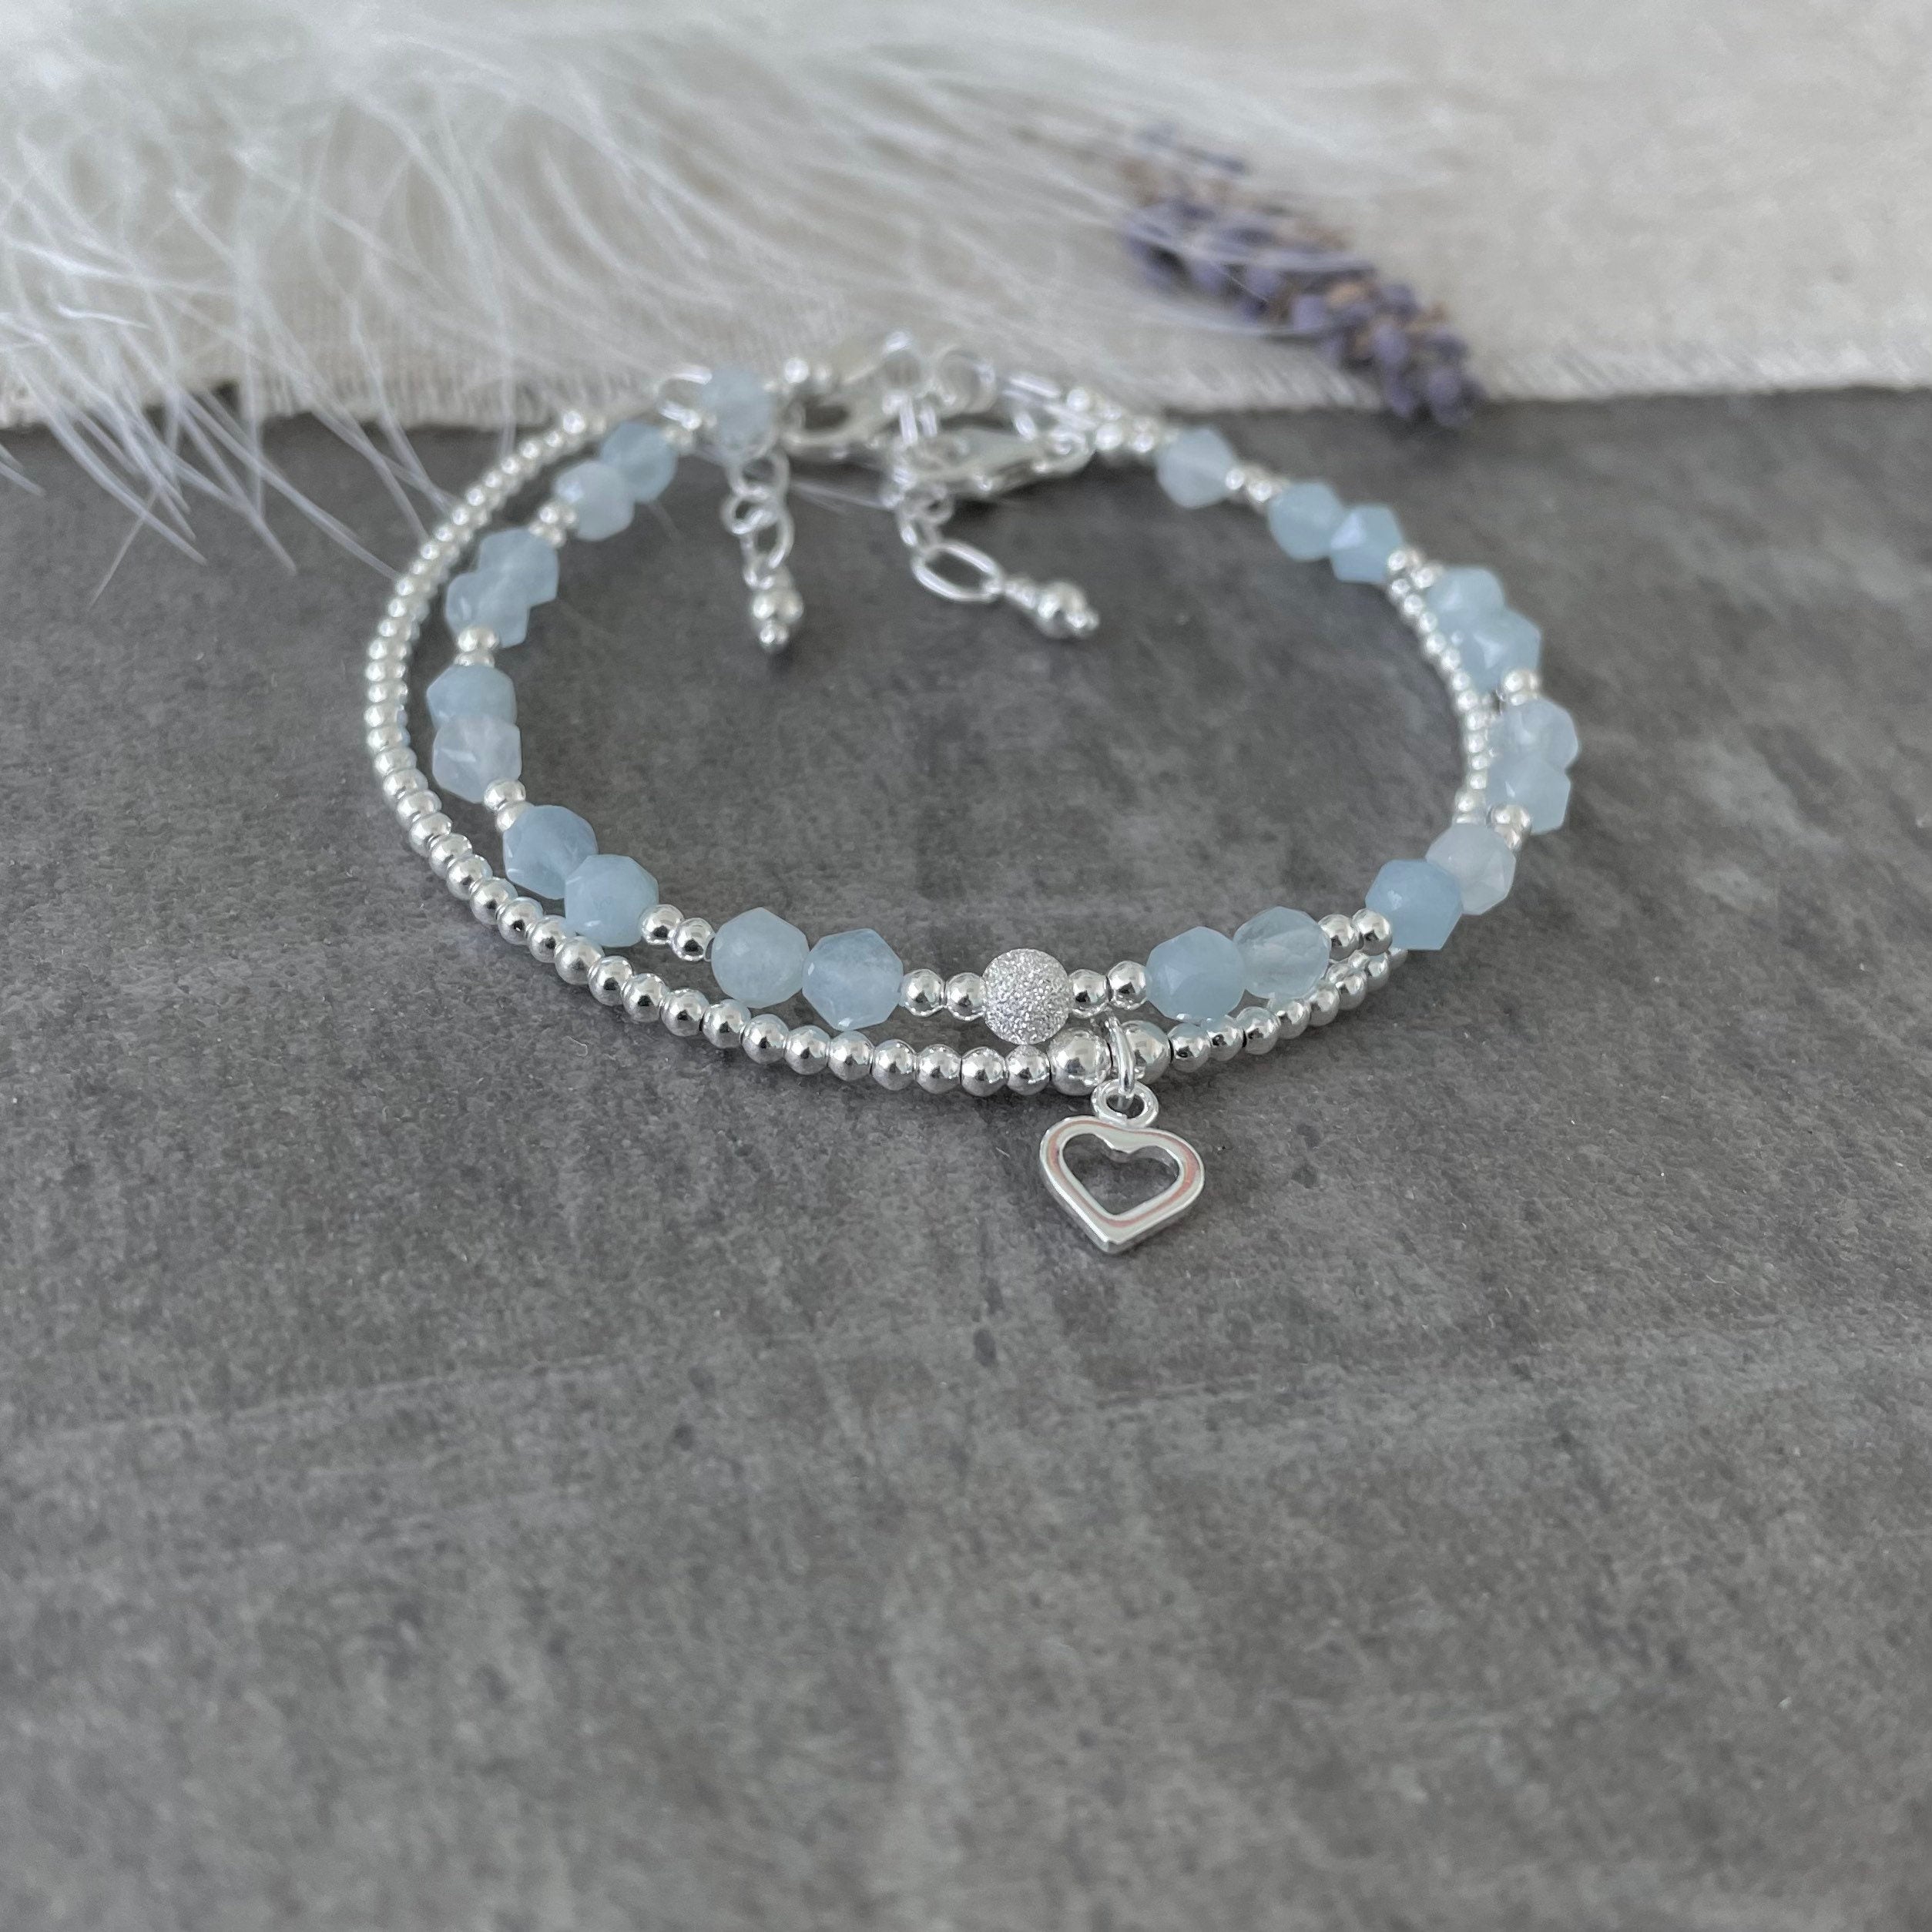 March Birthstone Bracelet – The Silver Unicorn